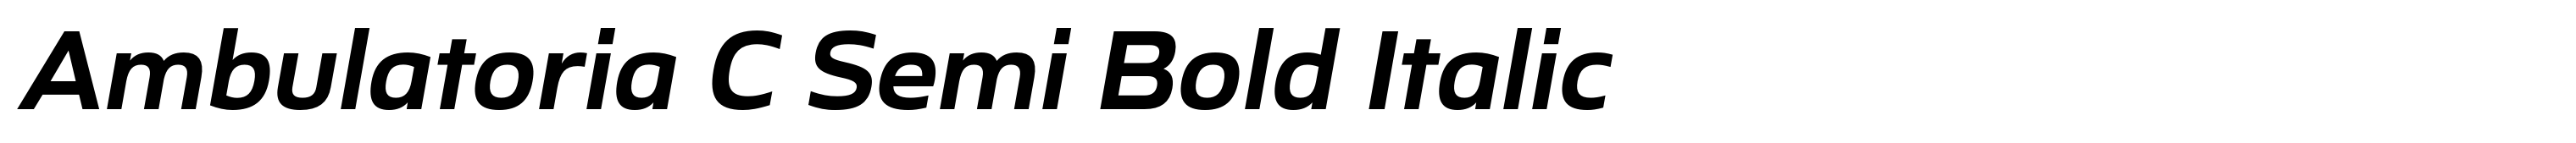 Ambulatoria C Semi Bold Italic